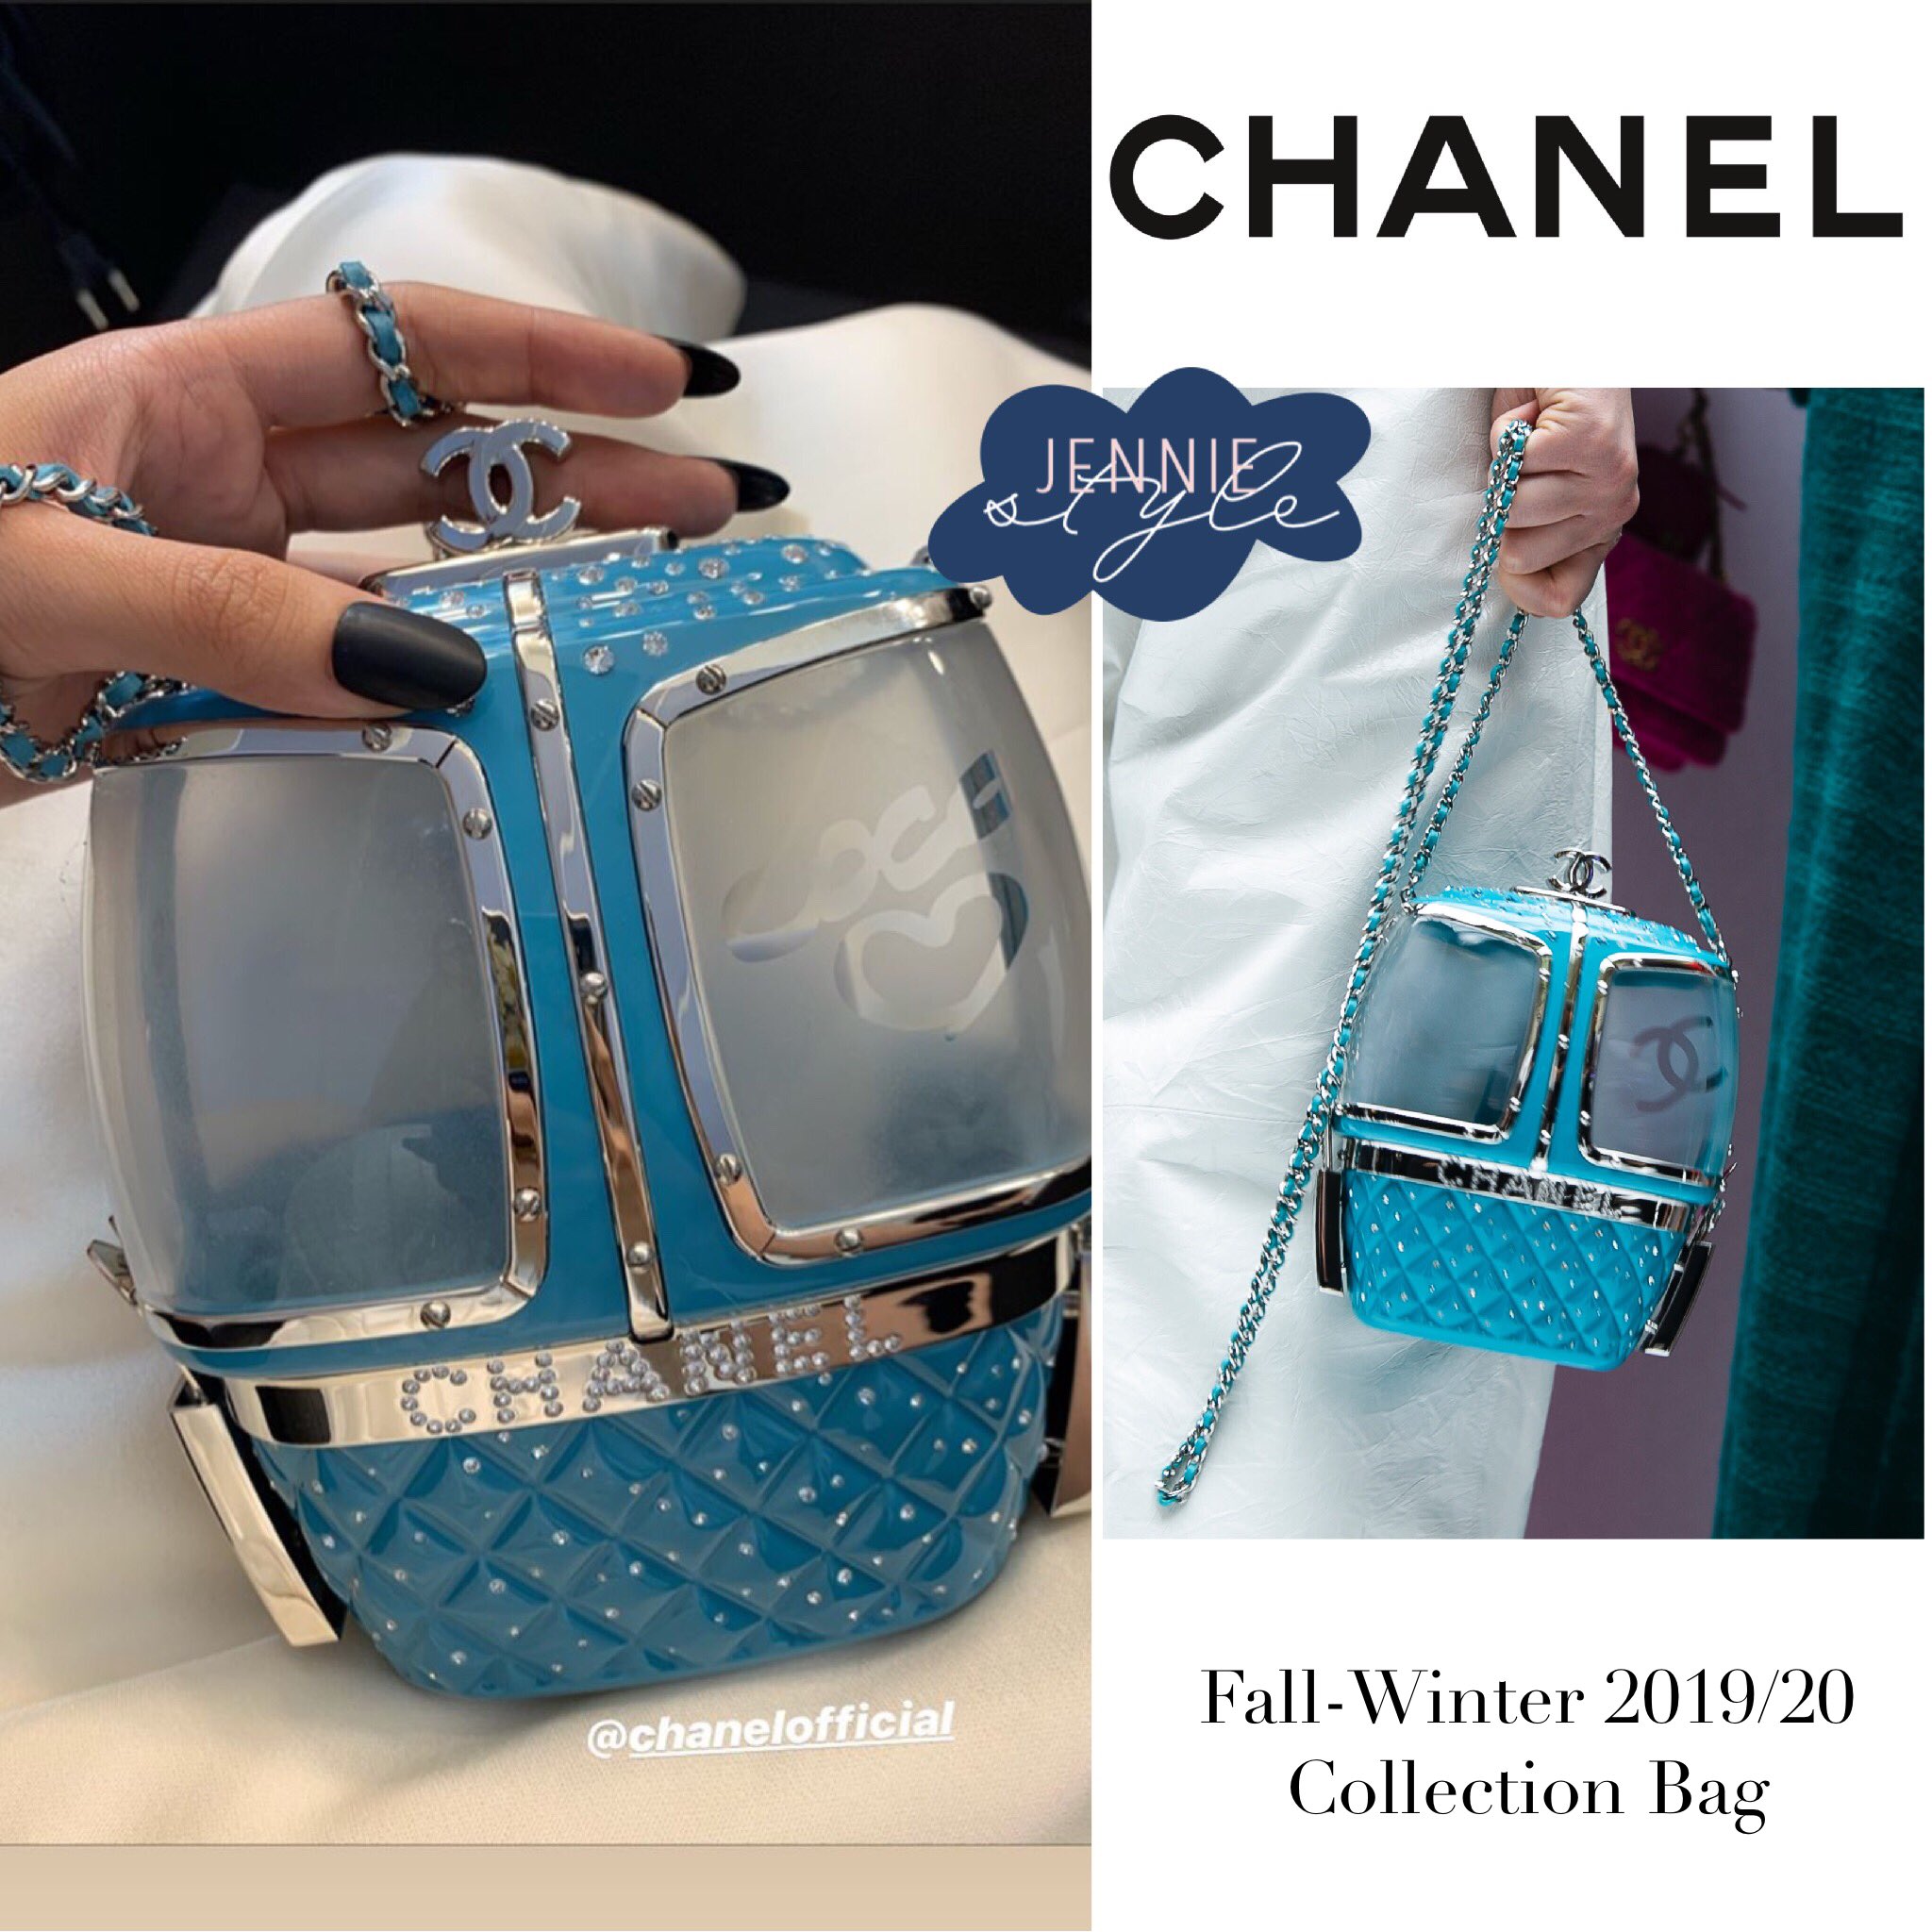 Jennie Style on X: jennierubyjane IG Update 190802 Chanel Fall-Winter  2019/20 Collection Bag (available in September) #jennie #jenniekim  #blackpink⁠ #blackpinkfashion #blackpinkstyle #jenniefashion #jenniestyle   / X